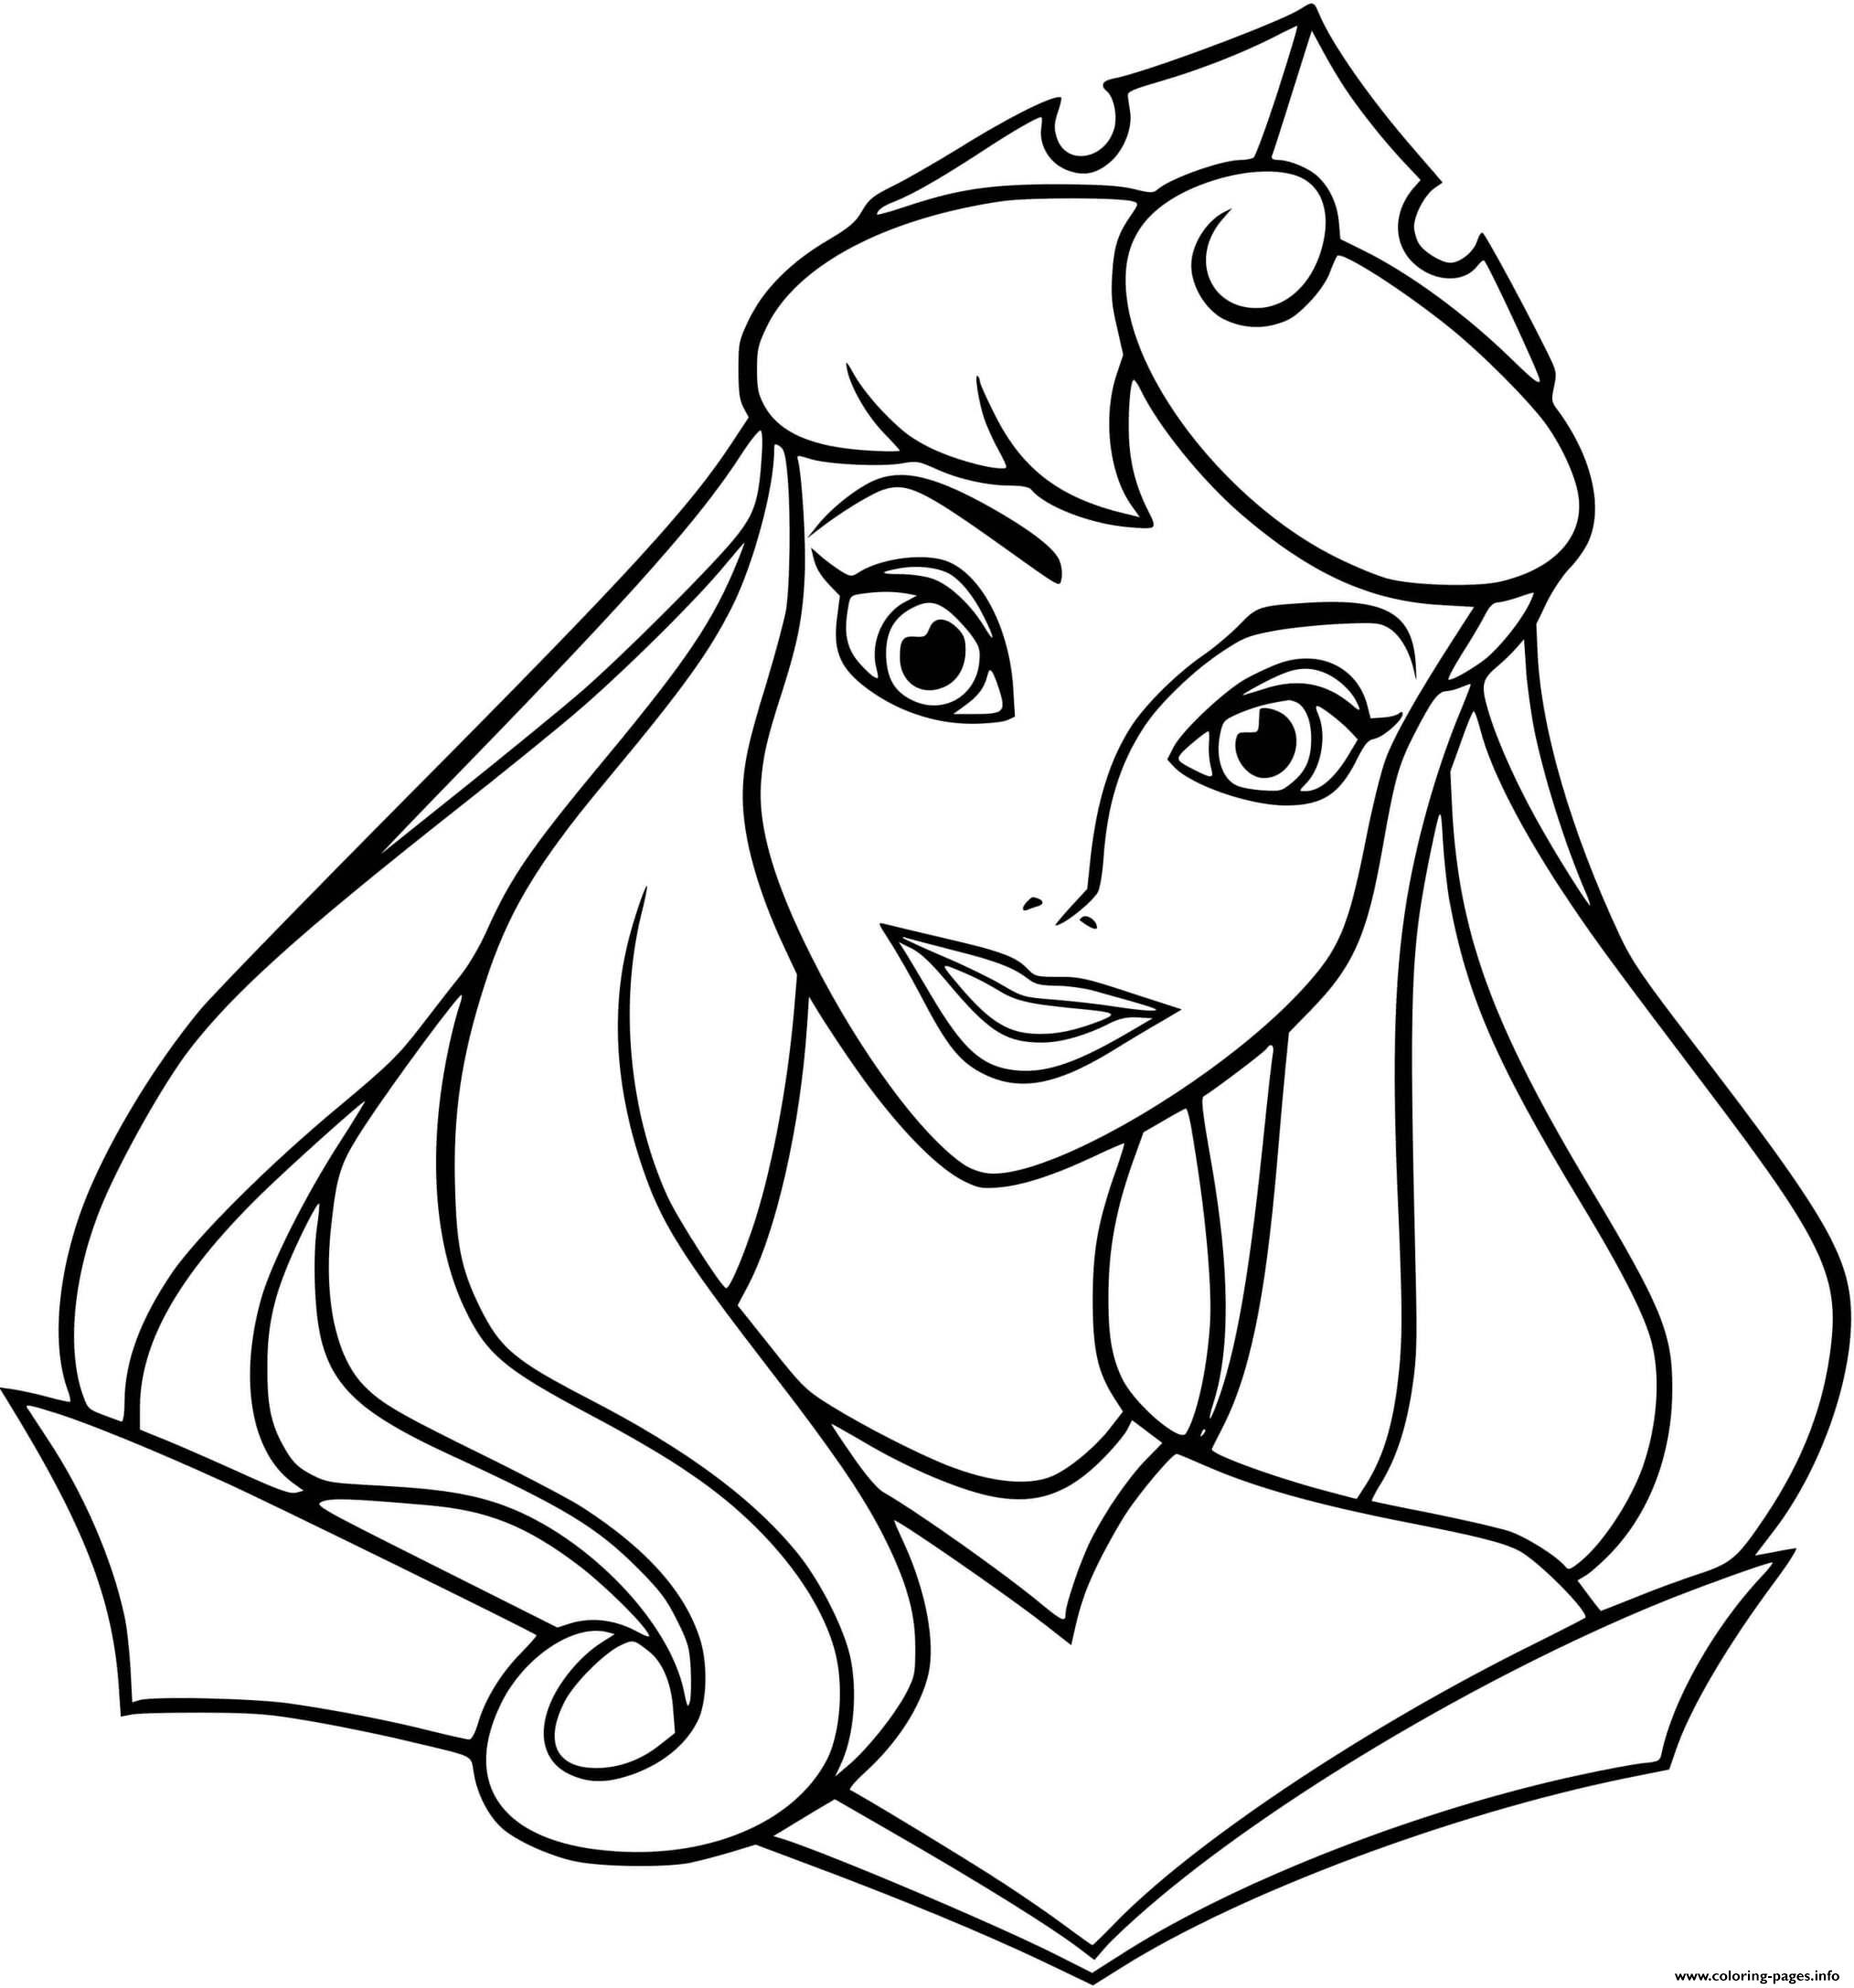 Princess Disney Aurora Sleeping Beauty coloring